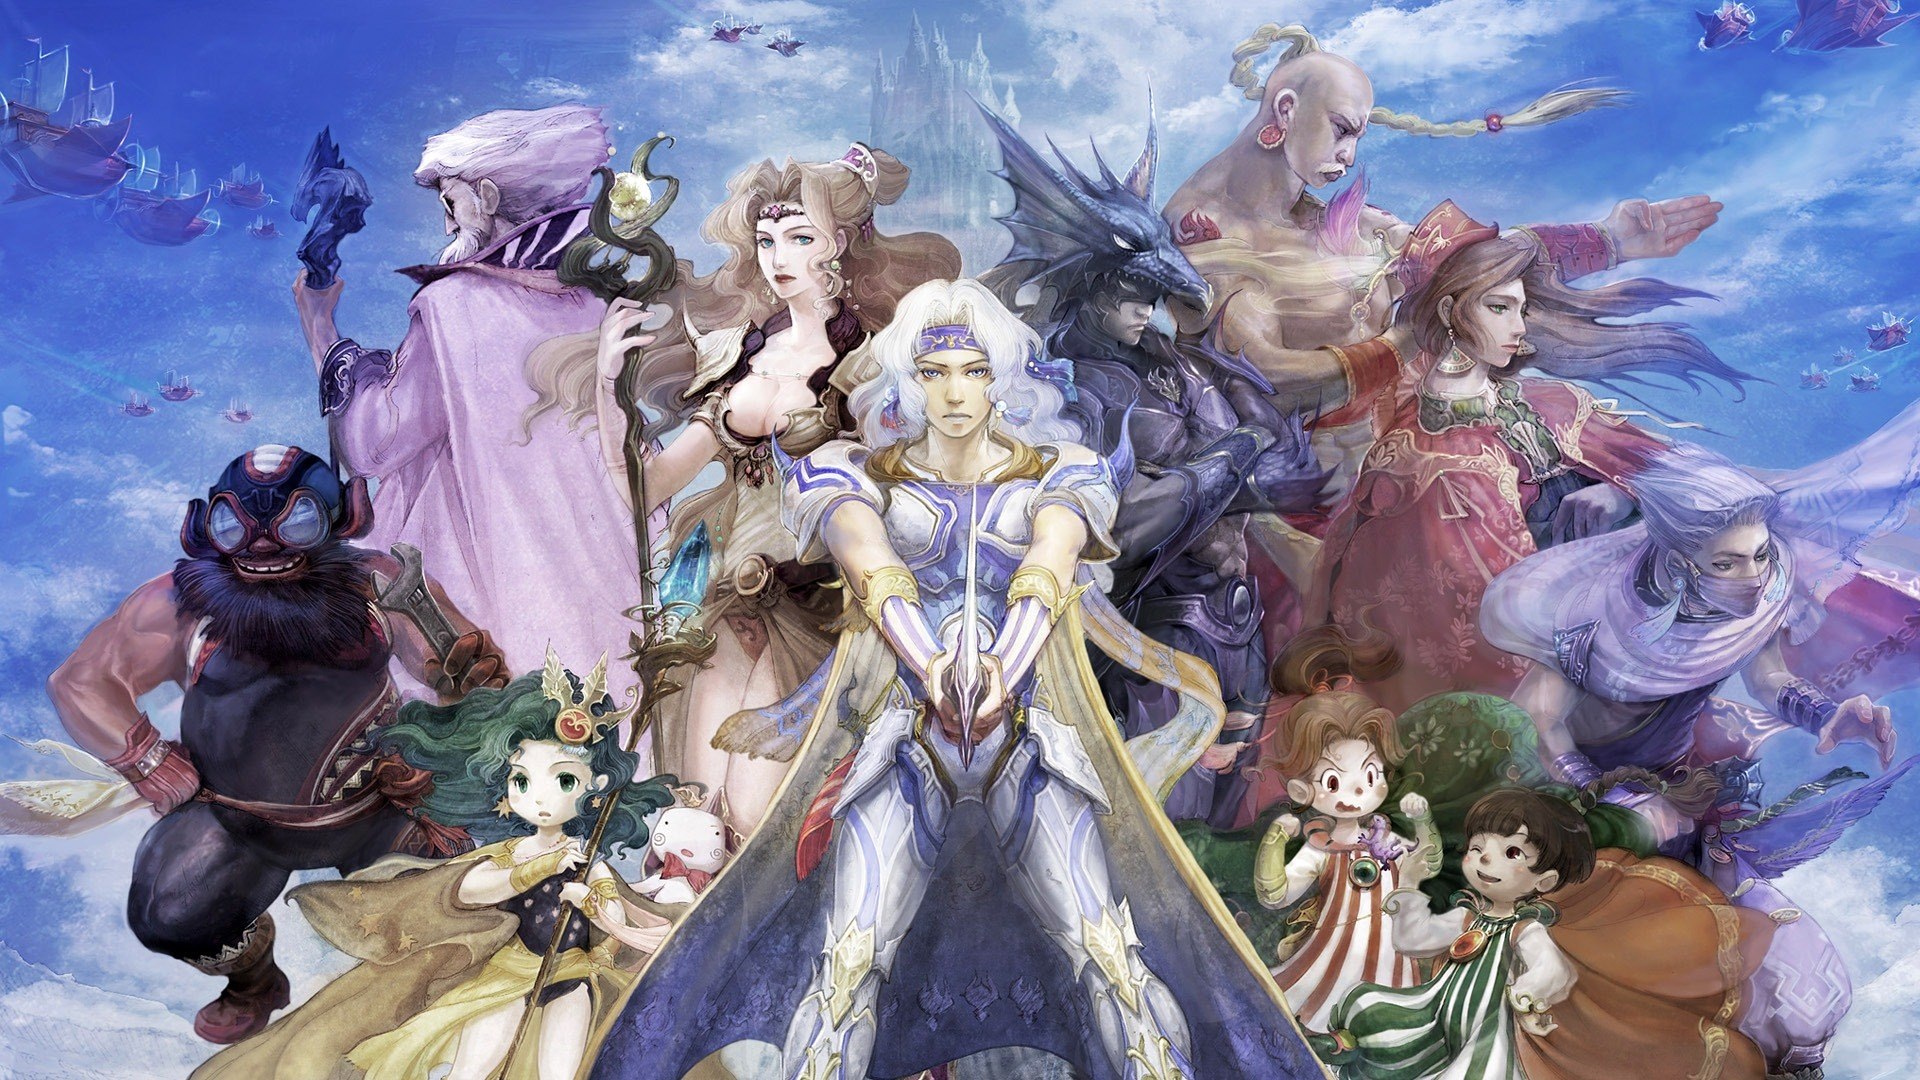 Final Fantasy Iv Advance wallpaper for desktop, download free Final Fantasy Iv Advance picture and background for PC